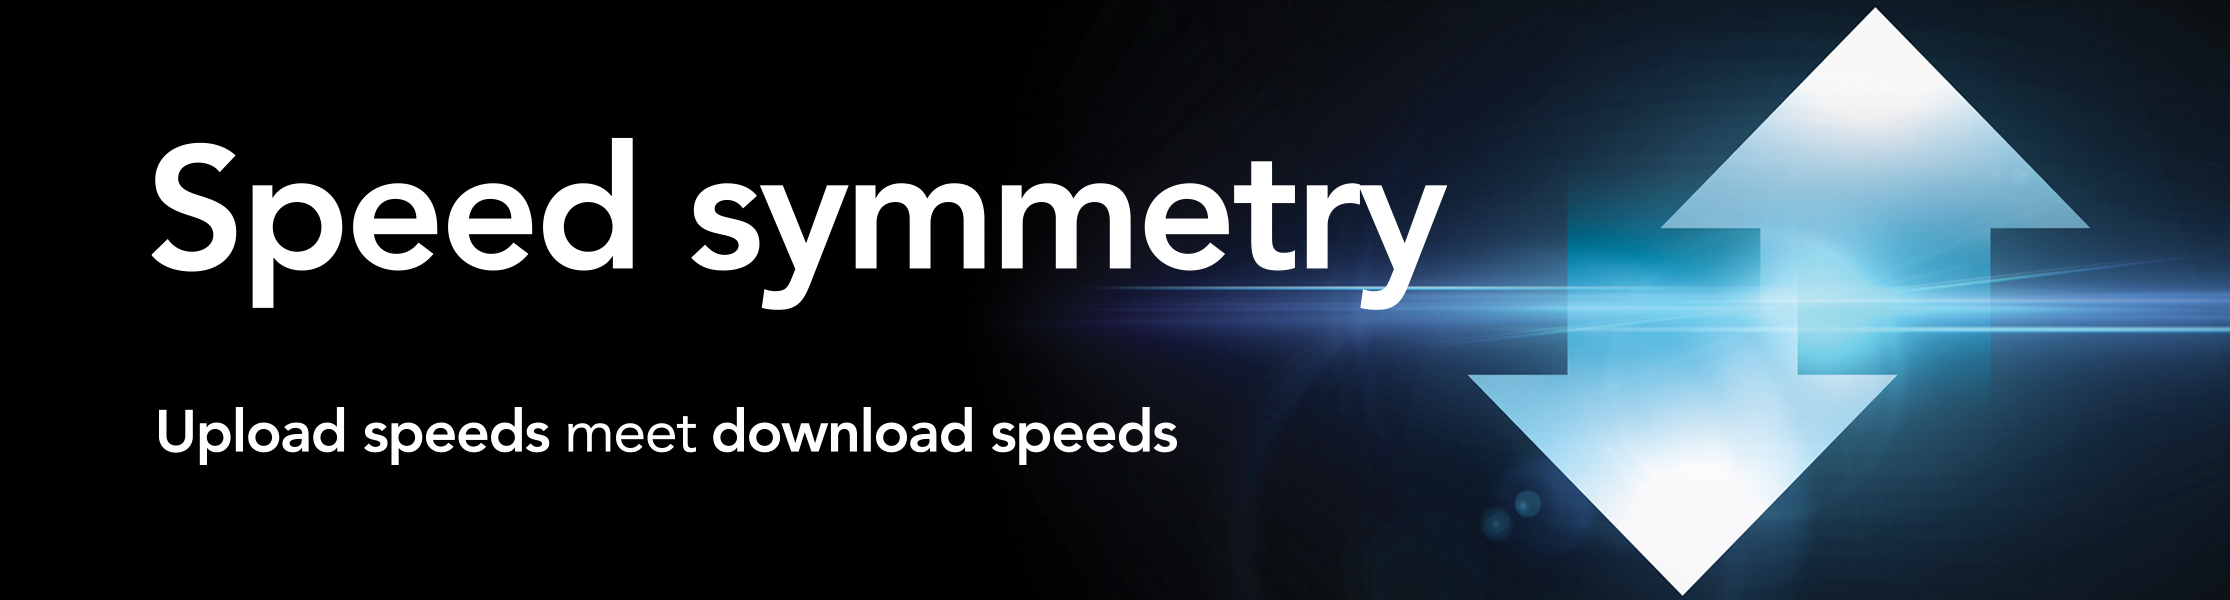 Symmetrical Speeds